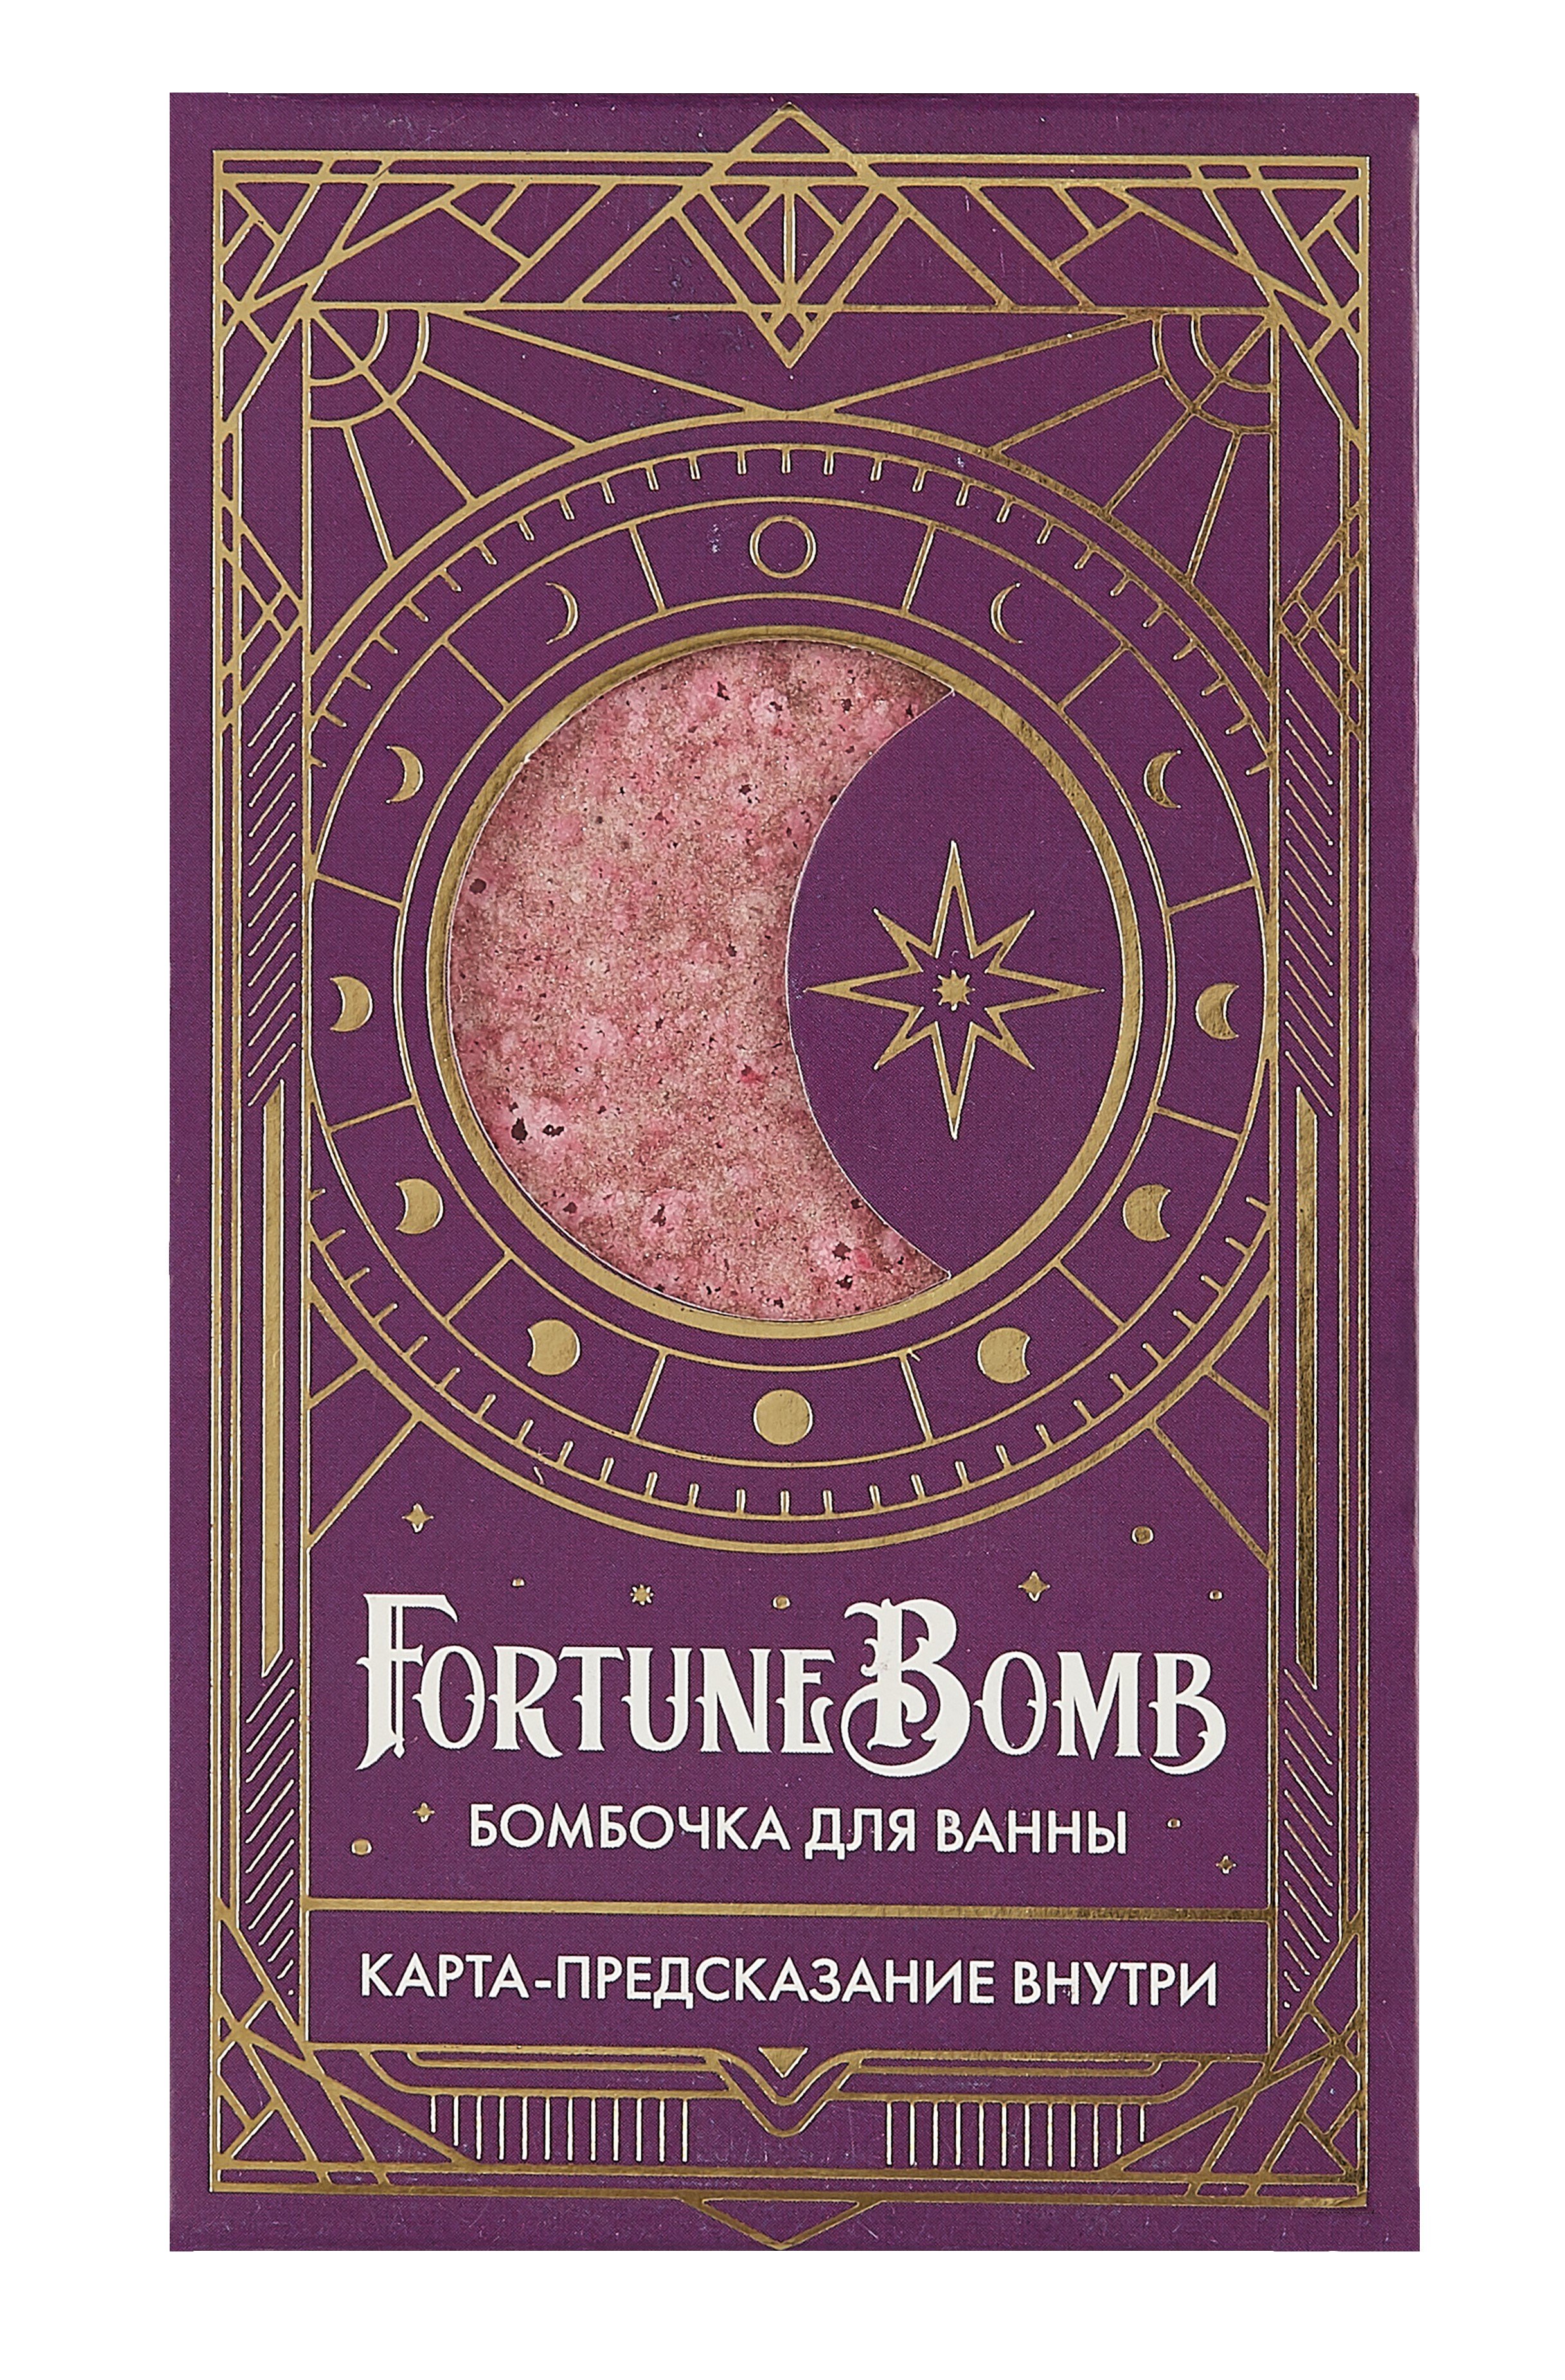      FortuneBomb   ( ) (150 )